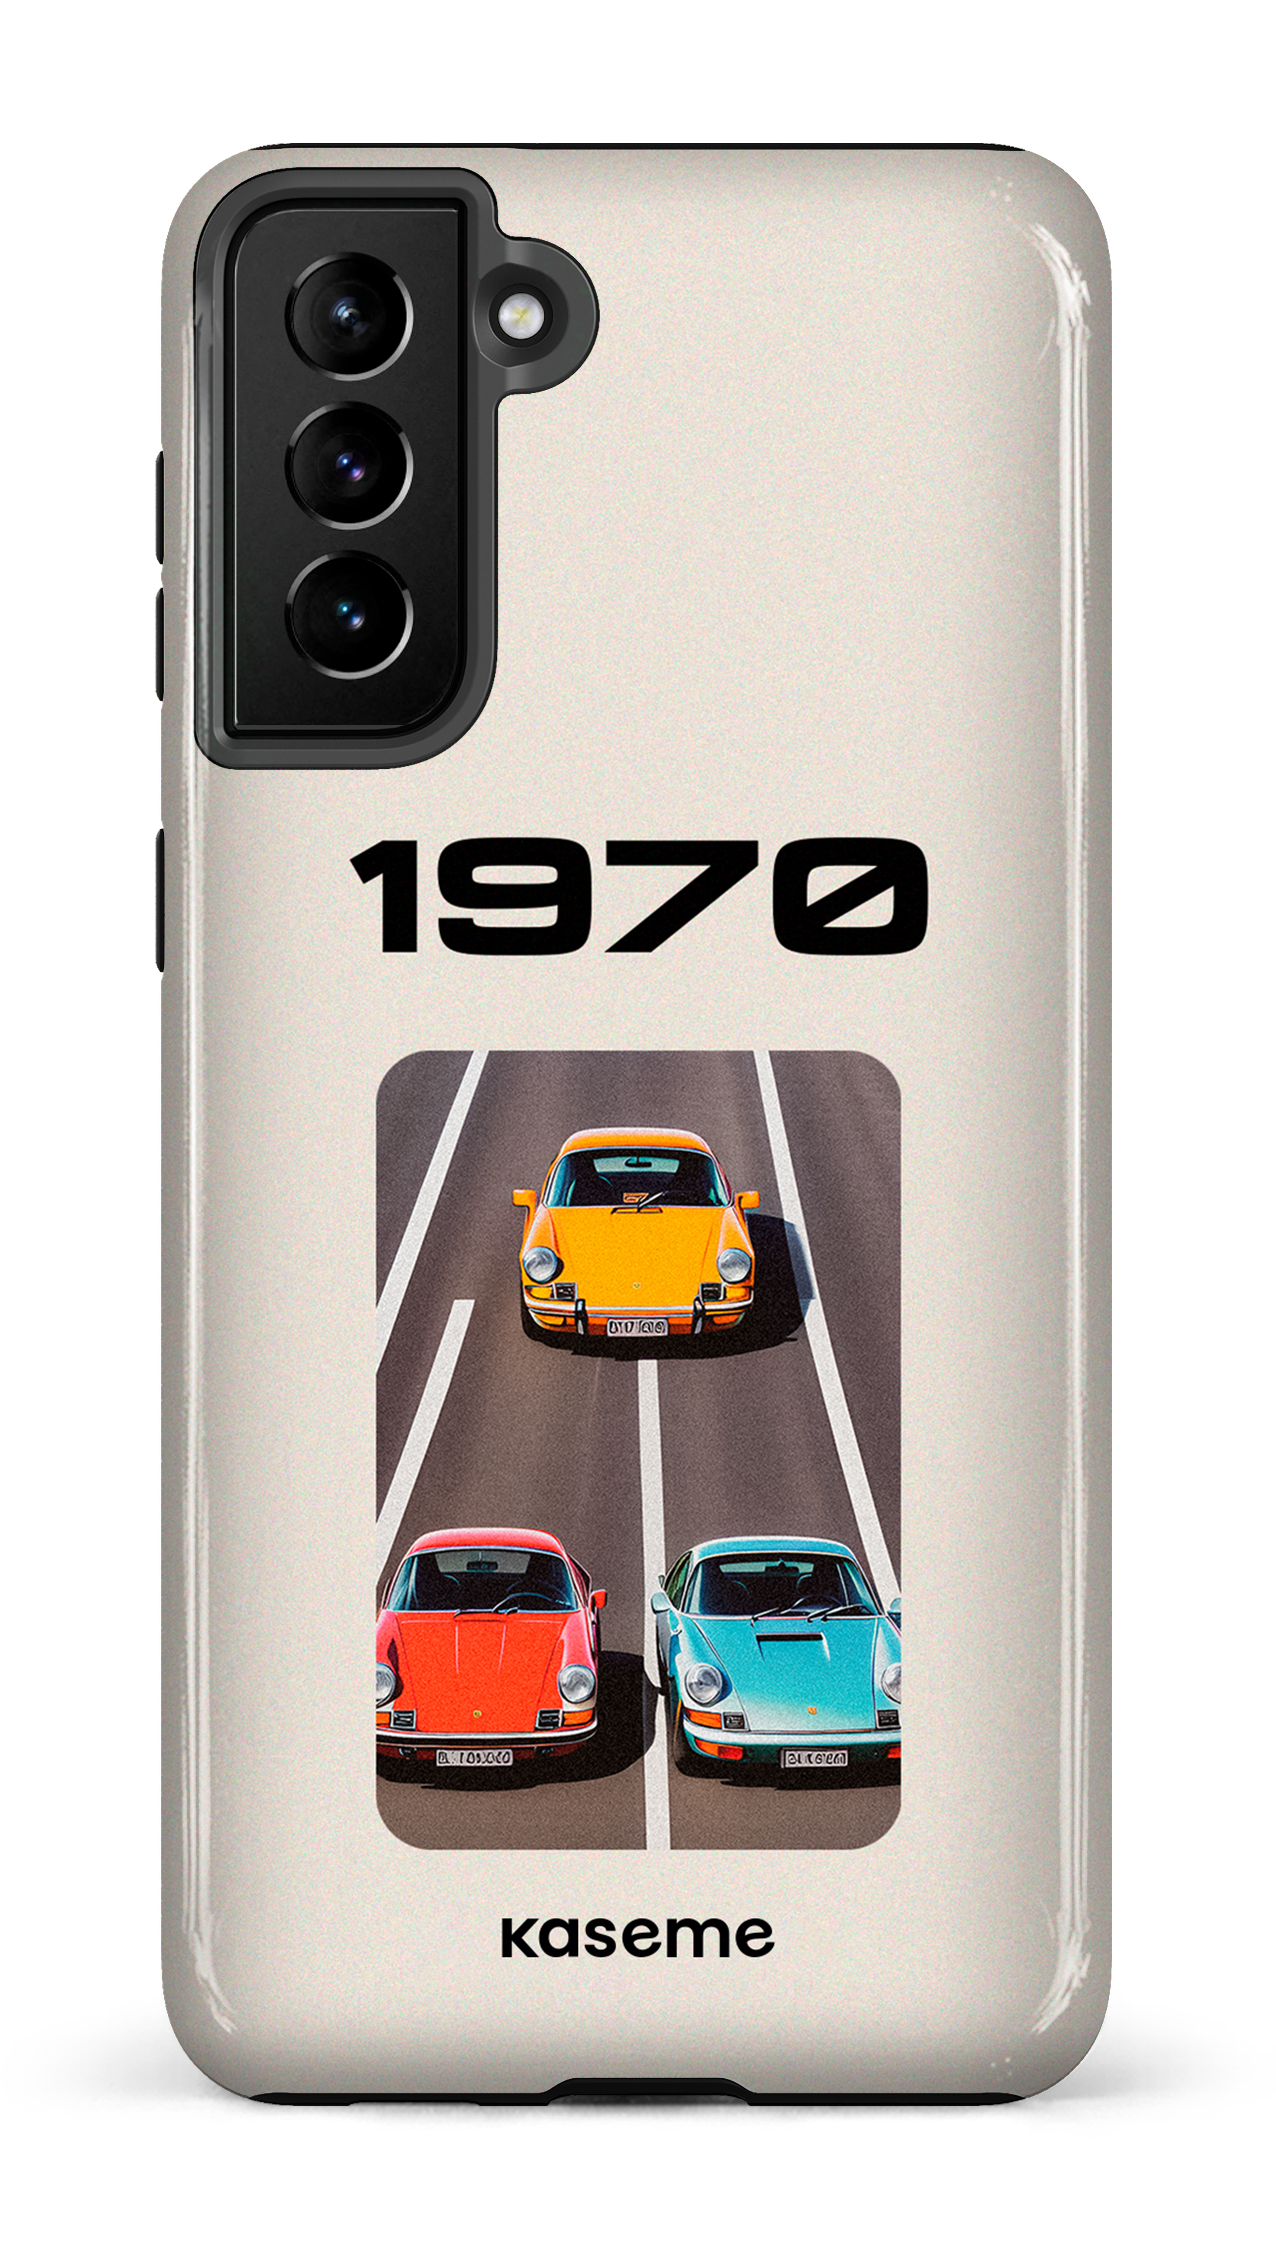 The 1970 - Galaxy S21 Plus